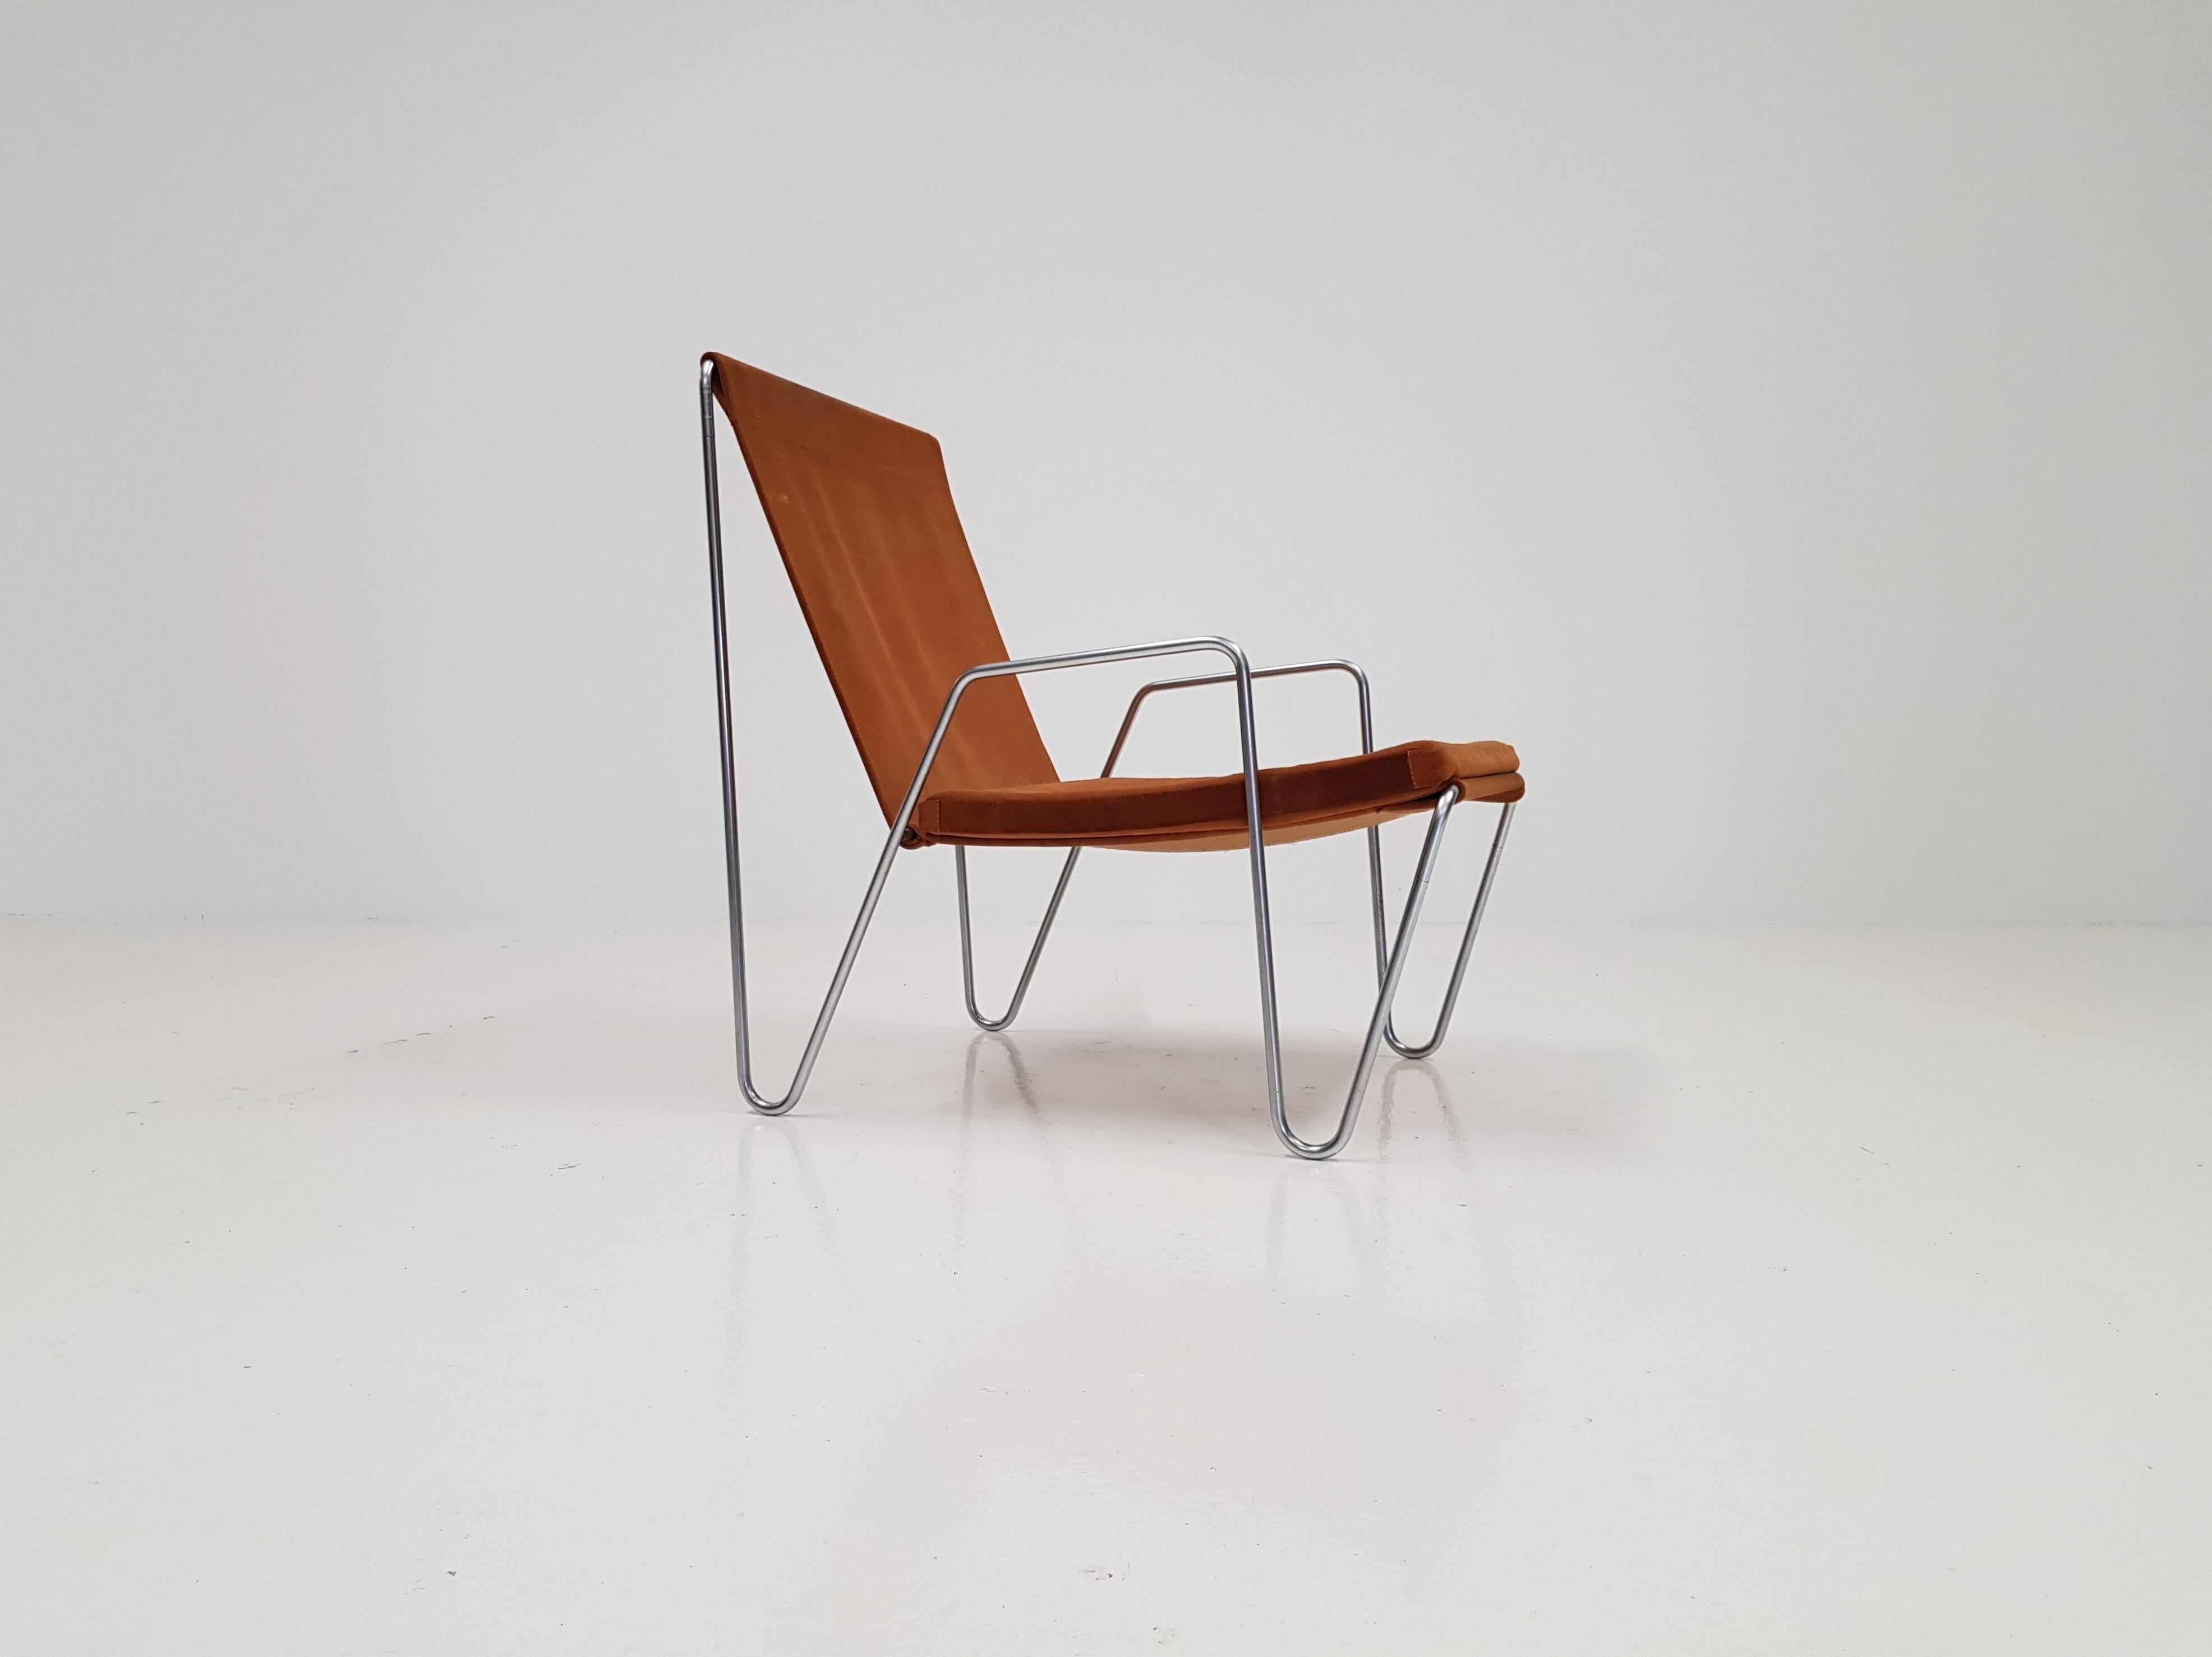 Verner Panton designed bachelor easy chair, 1955 for Fritz Hansen, Denmark.

An iconic suede bachelor easy chair designed by Verner Panton in 1955 and manufactured by Fritz Hansen, Denmark. 



 